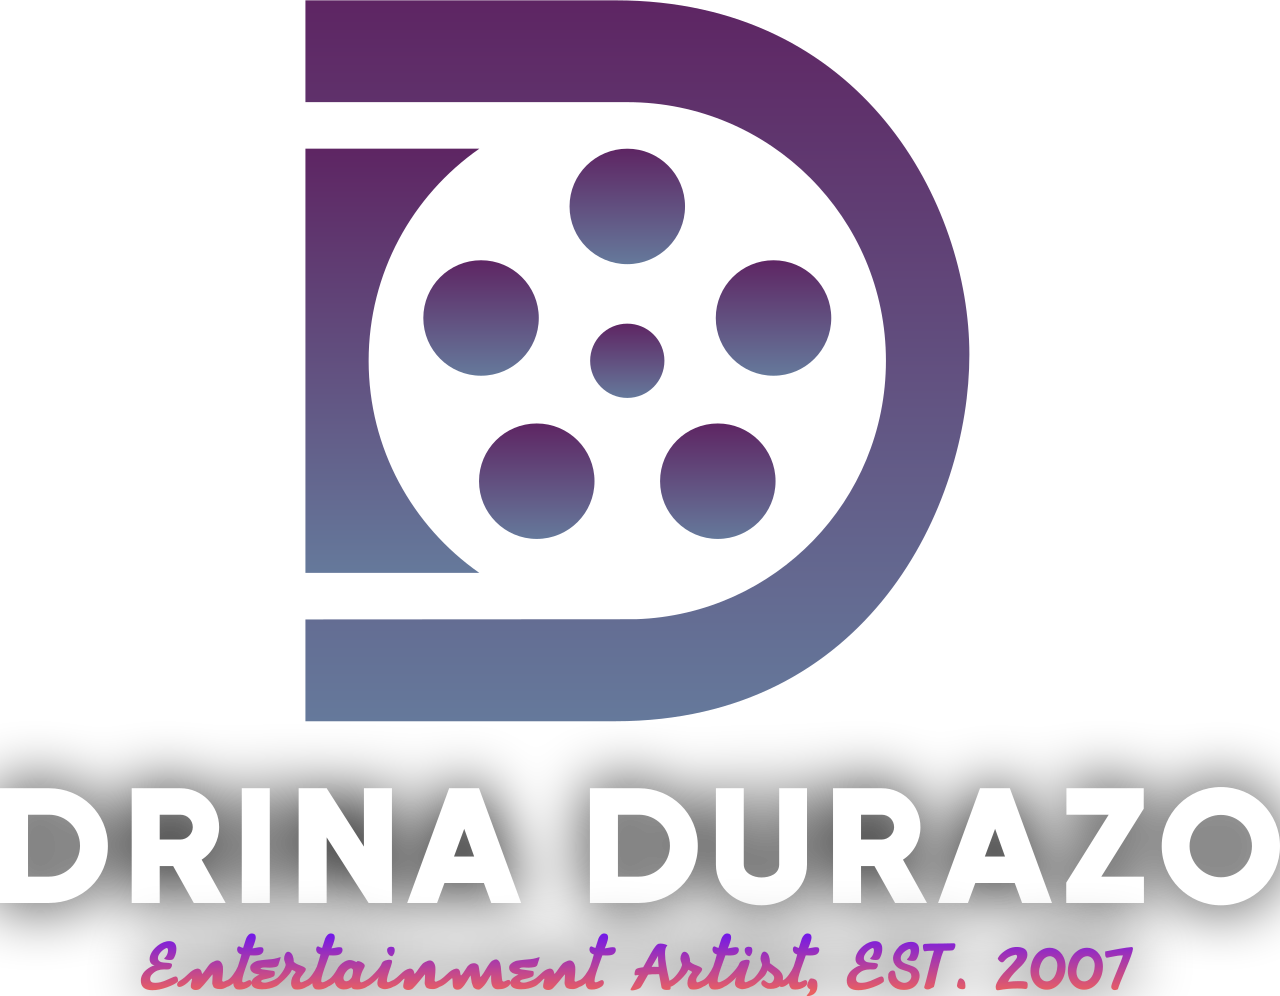 Drina Durazo - Entertainment Artist